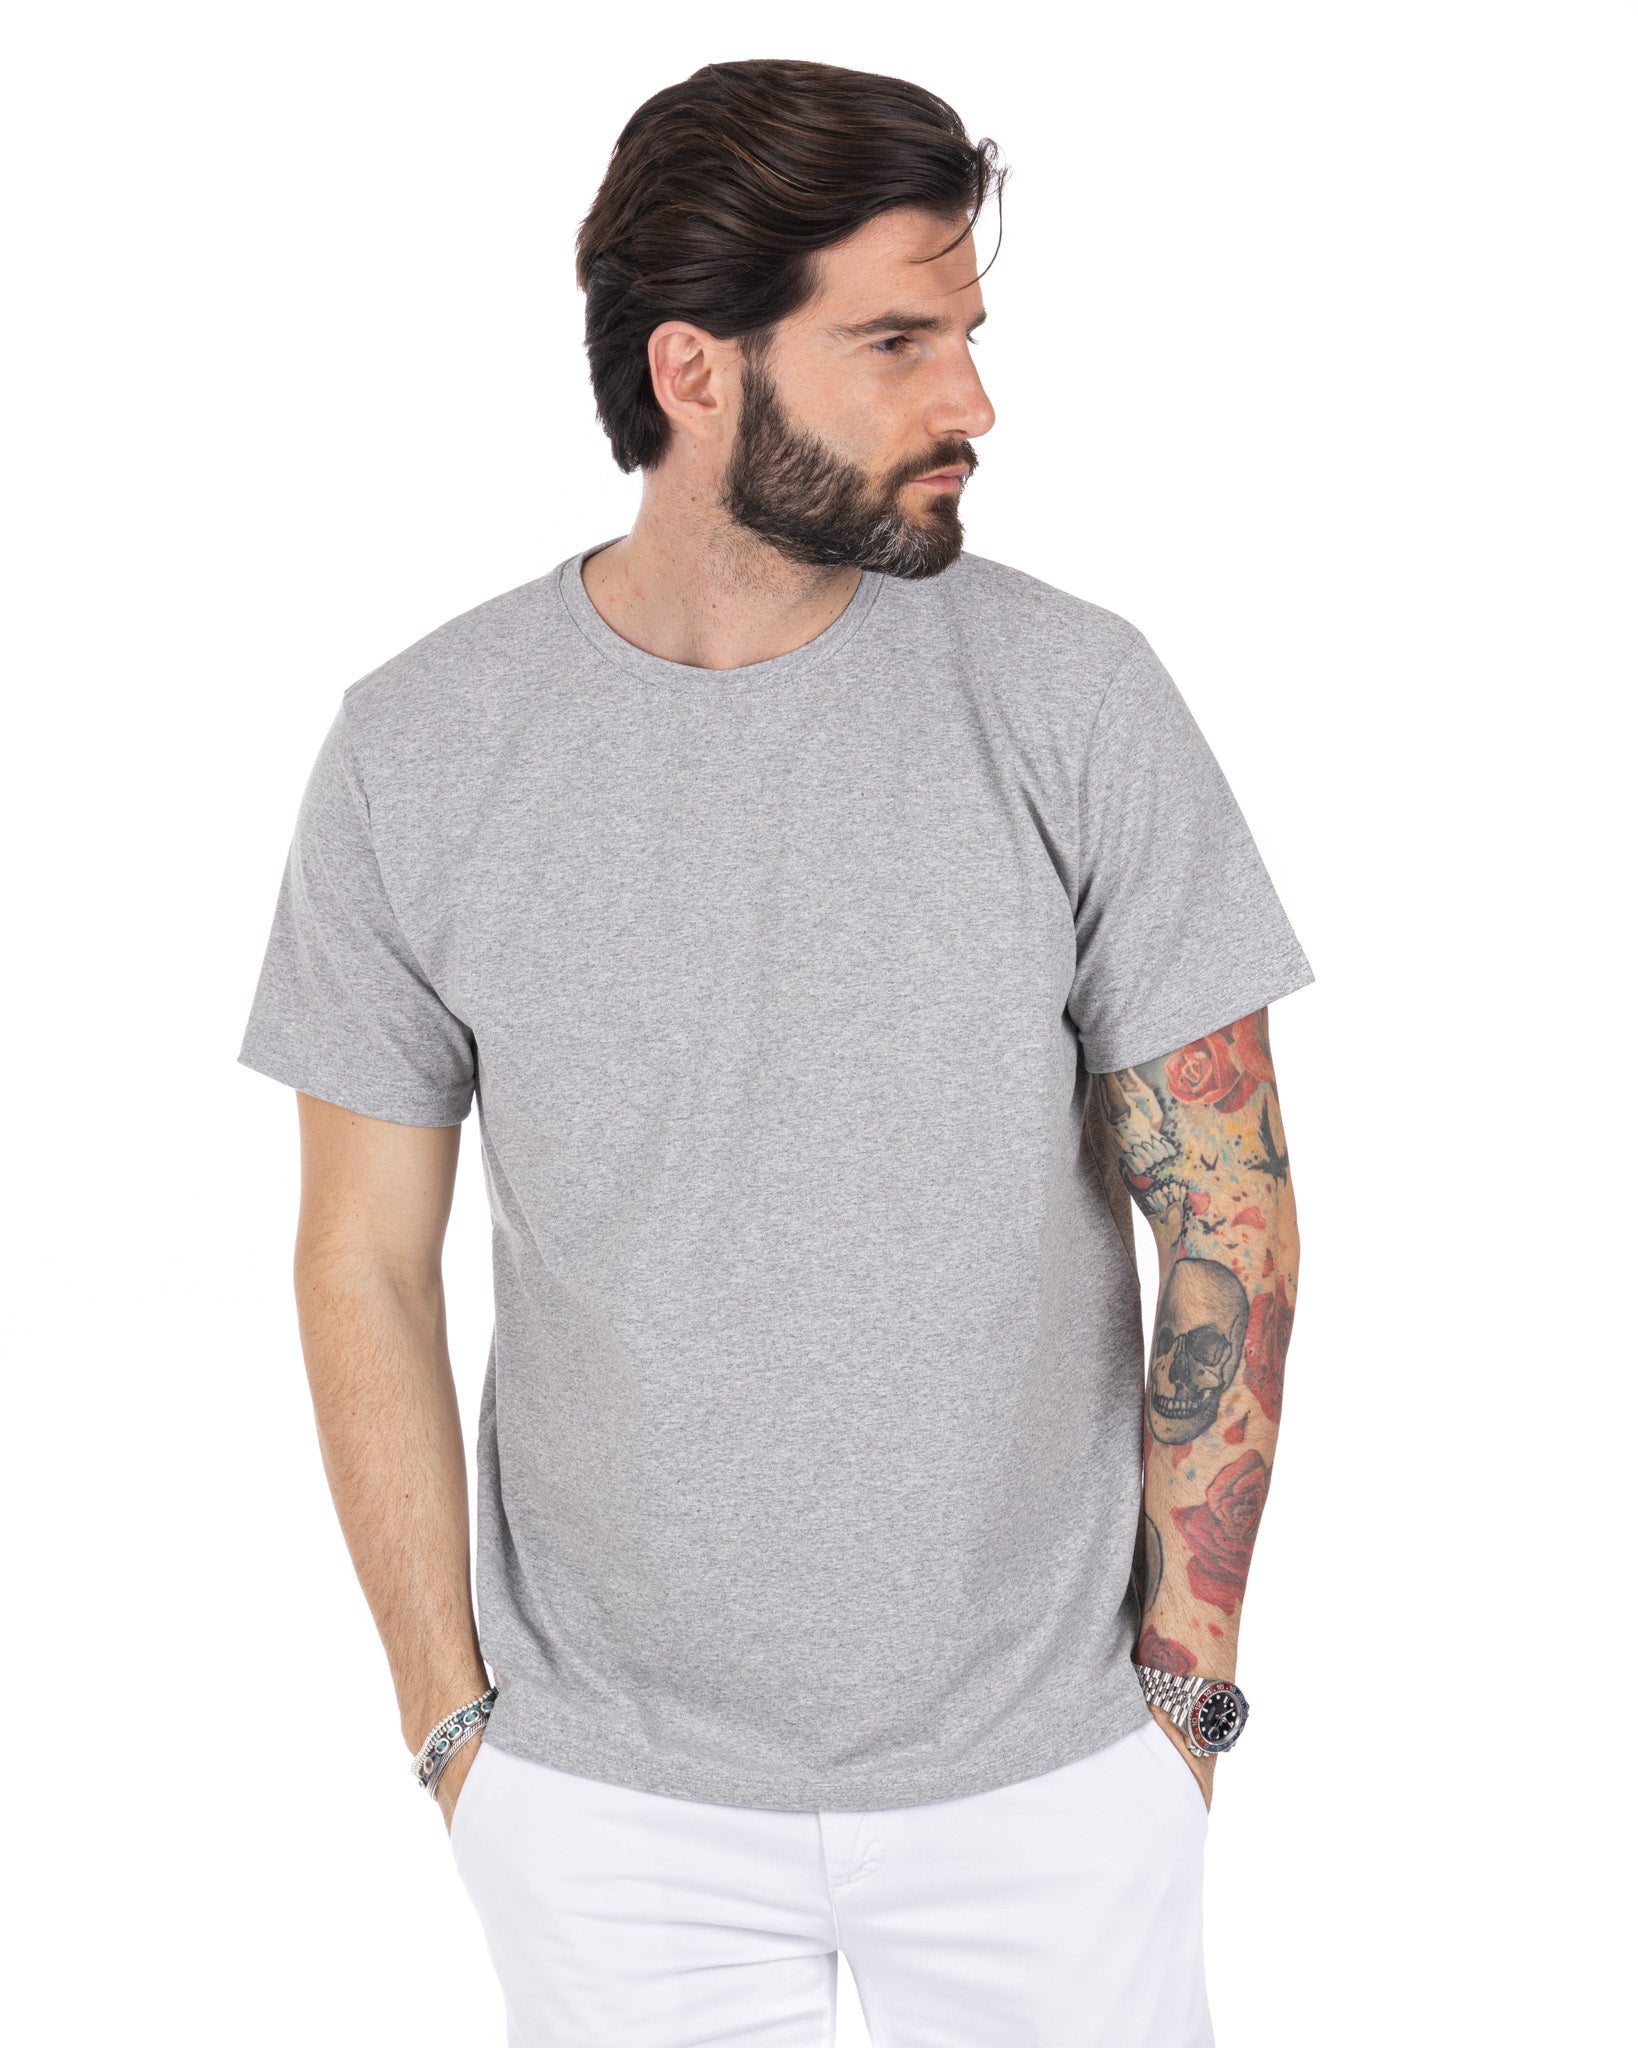 Harry - gray stretch cotton t-shirt